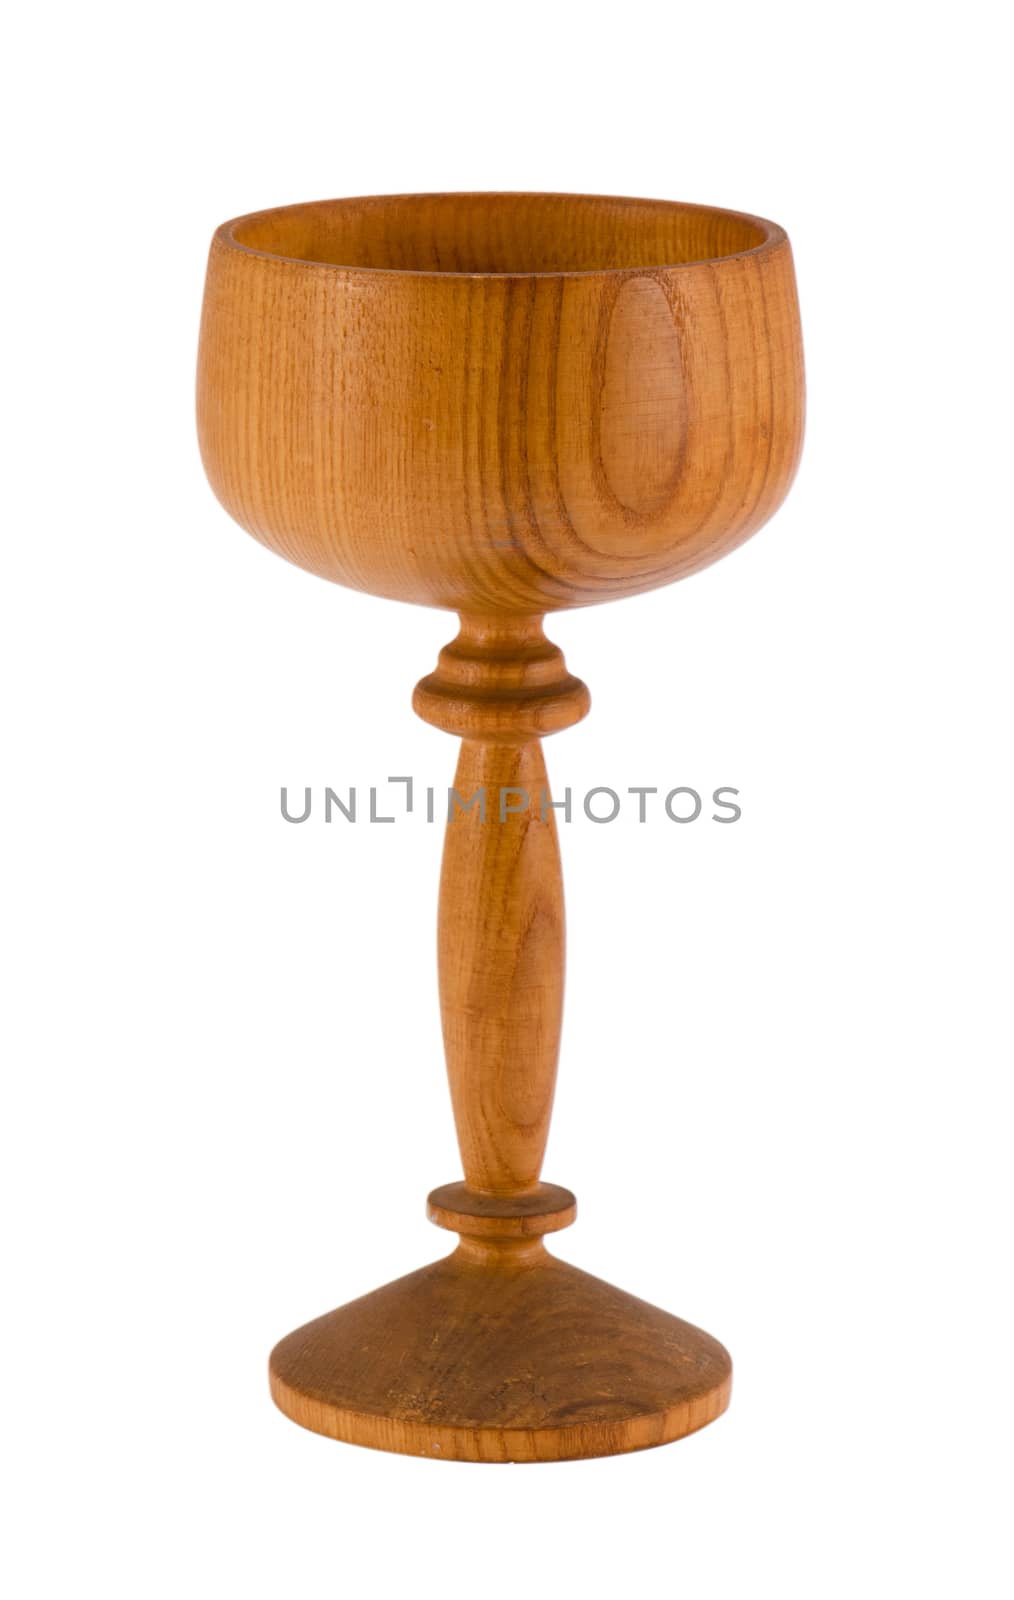 retro wooden wineglass tumbler isolated on white background.